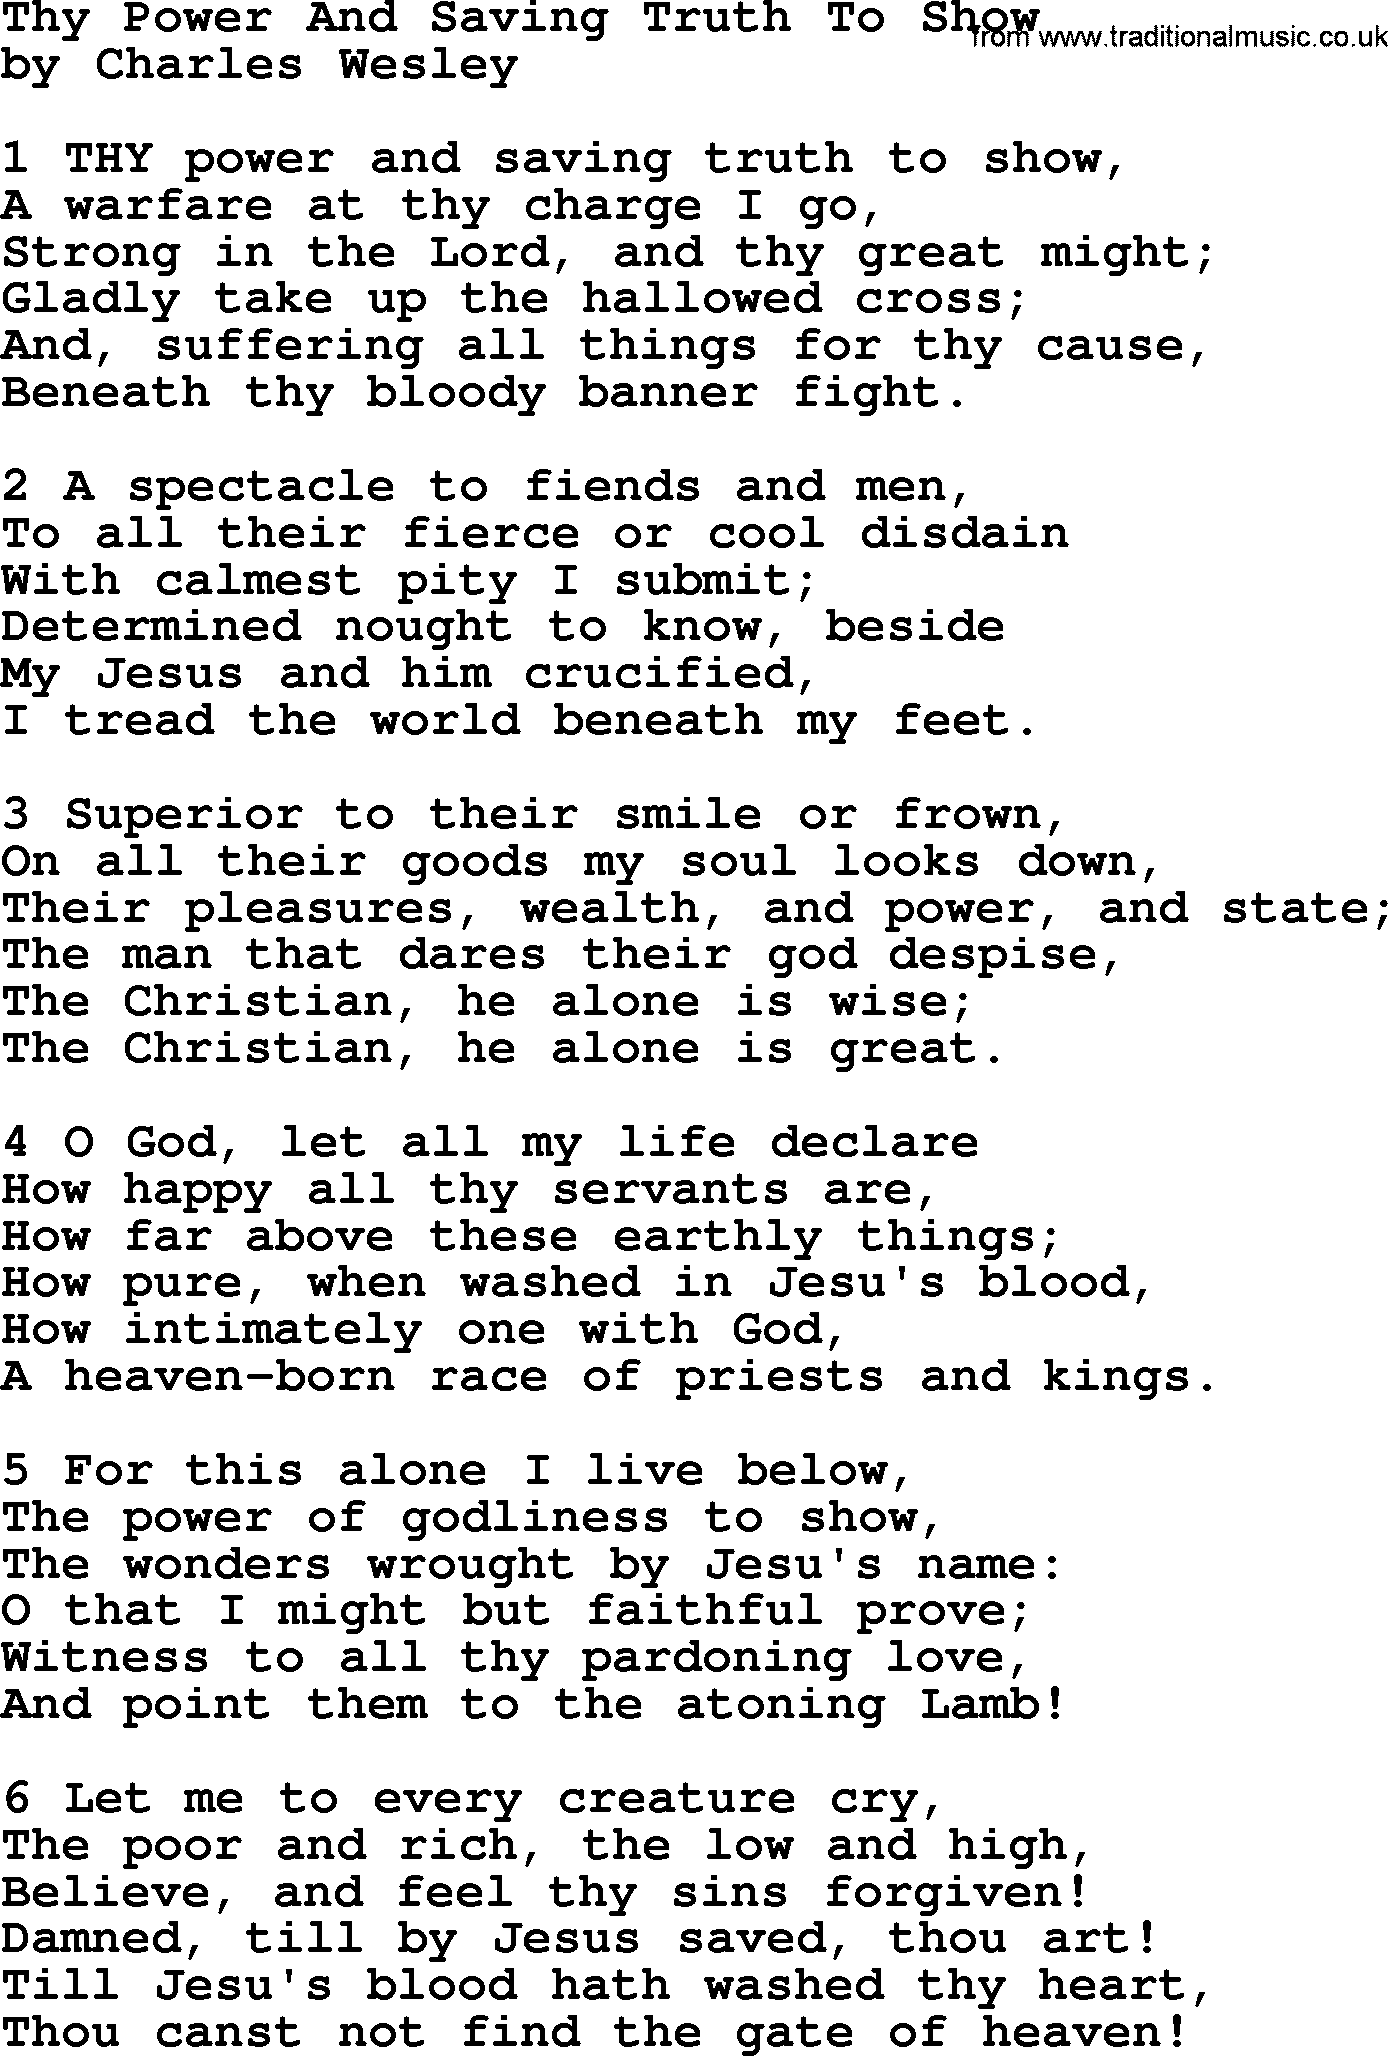 Charles Wesley hymn: Thy Power And Saving Truth To Show, lyrics